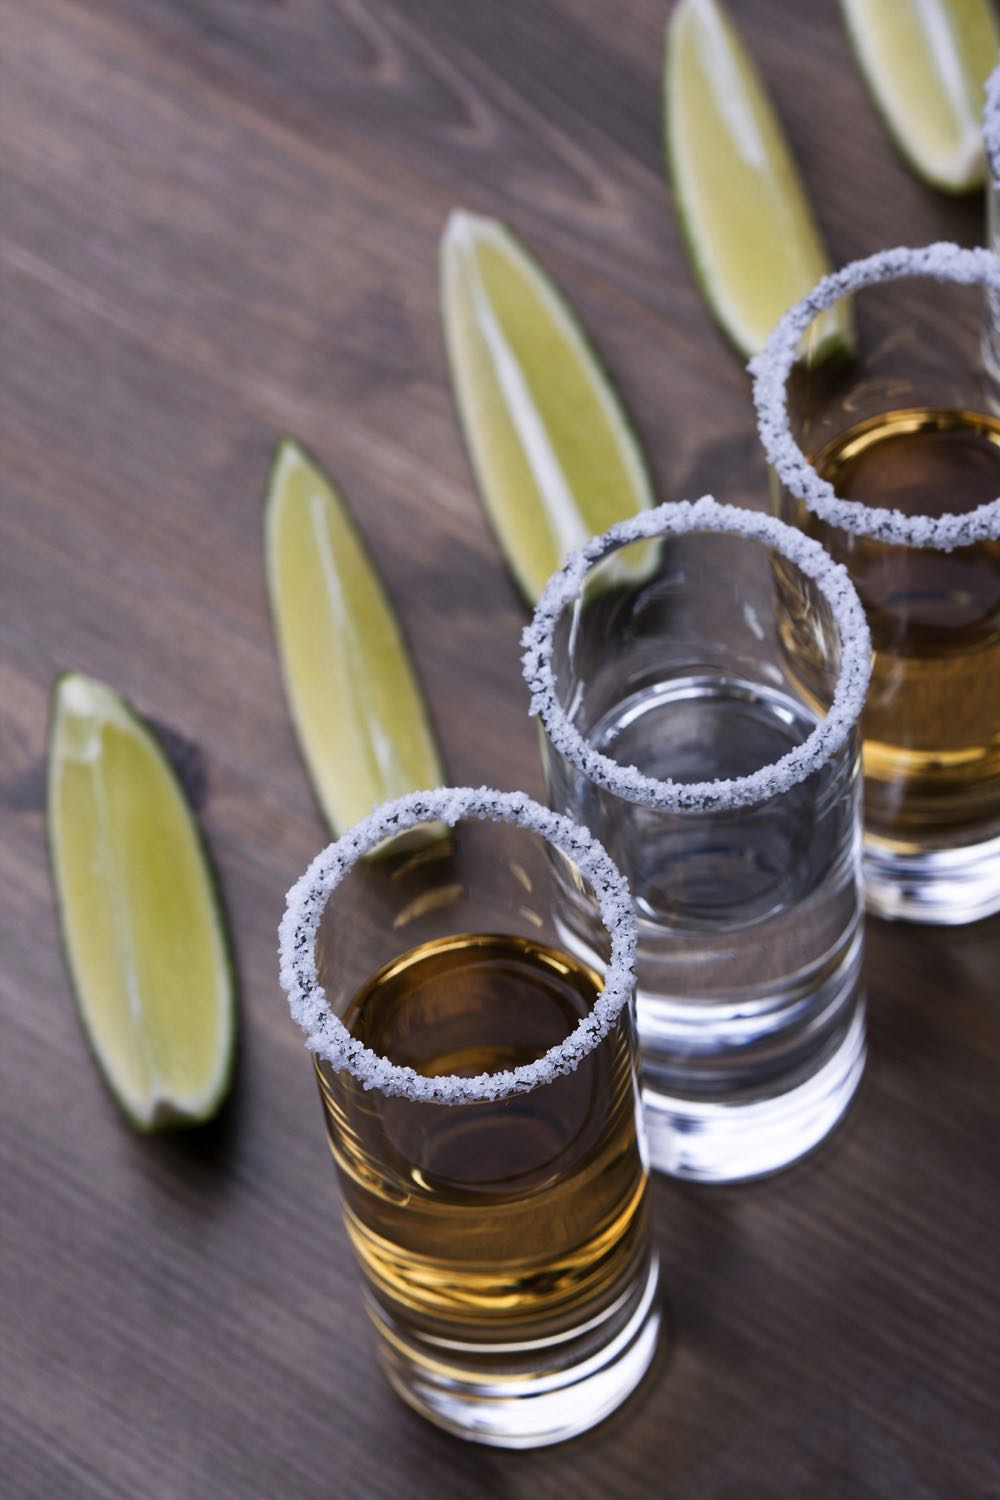 Tequila shots in Puerto Vallarta